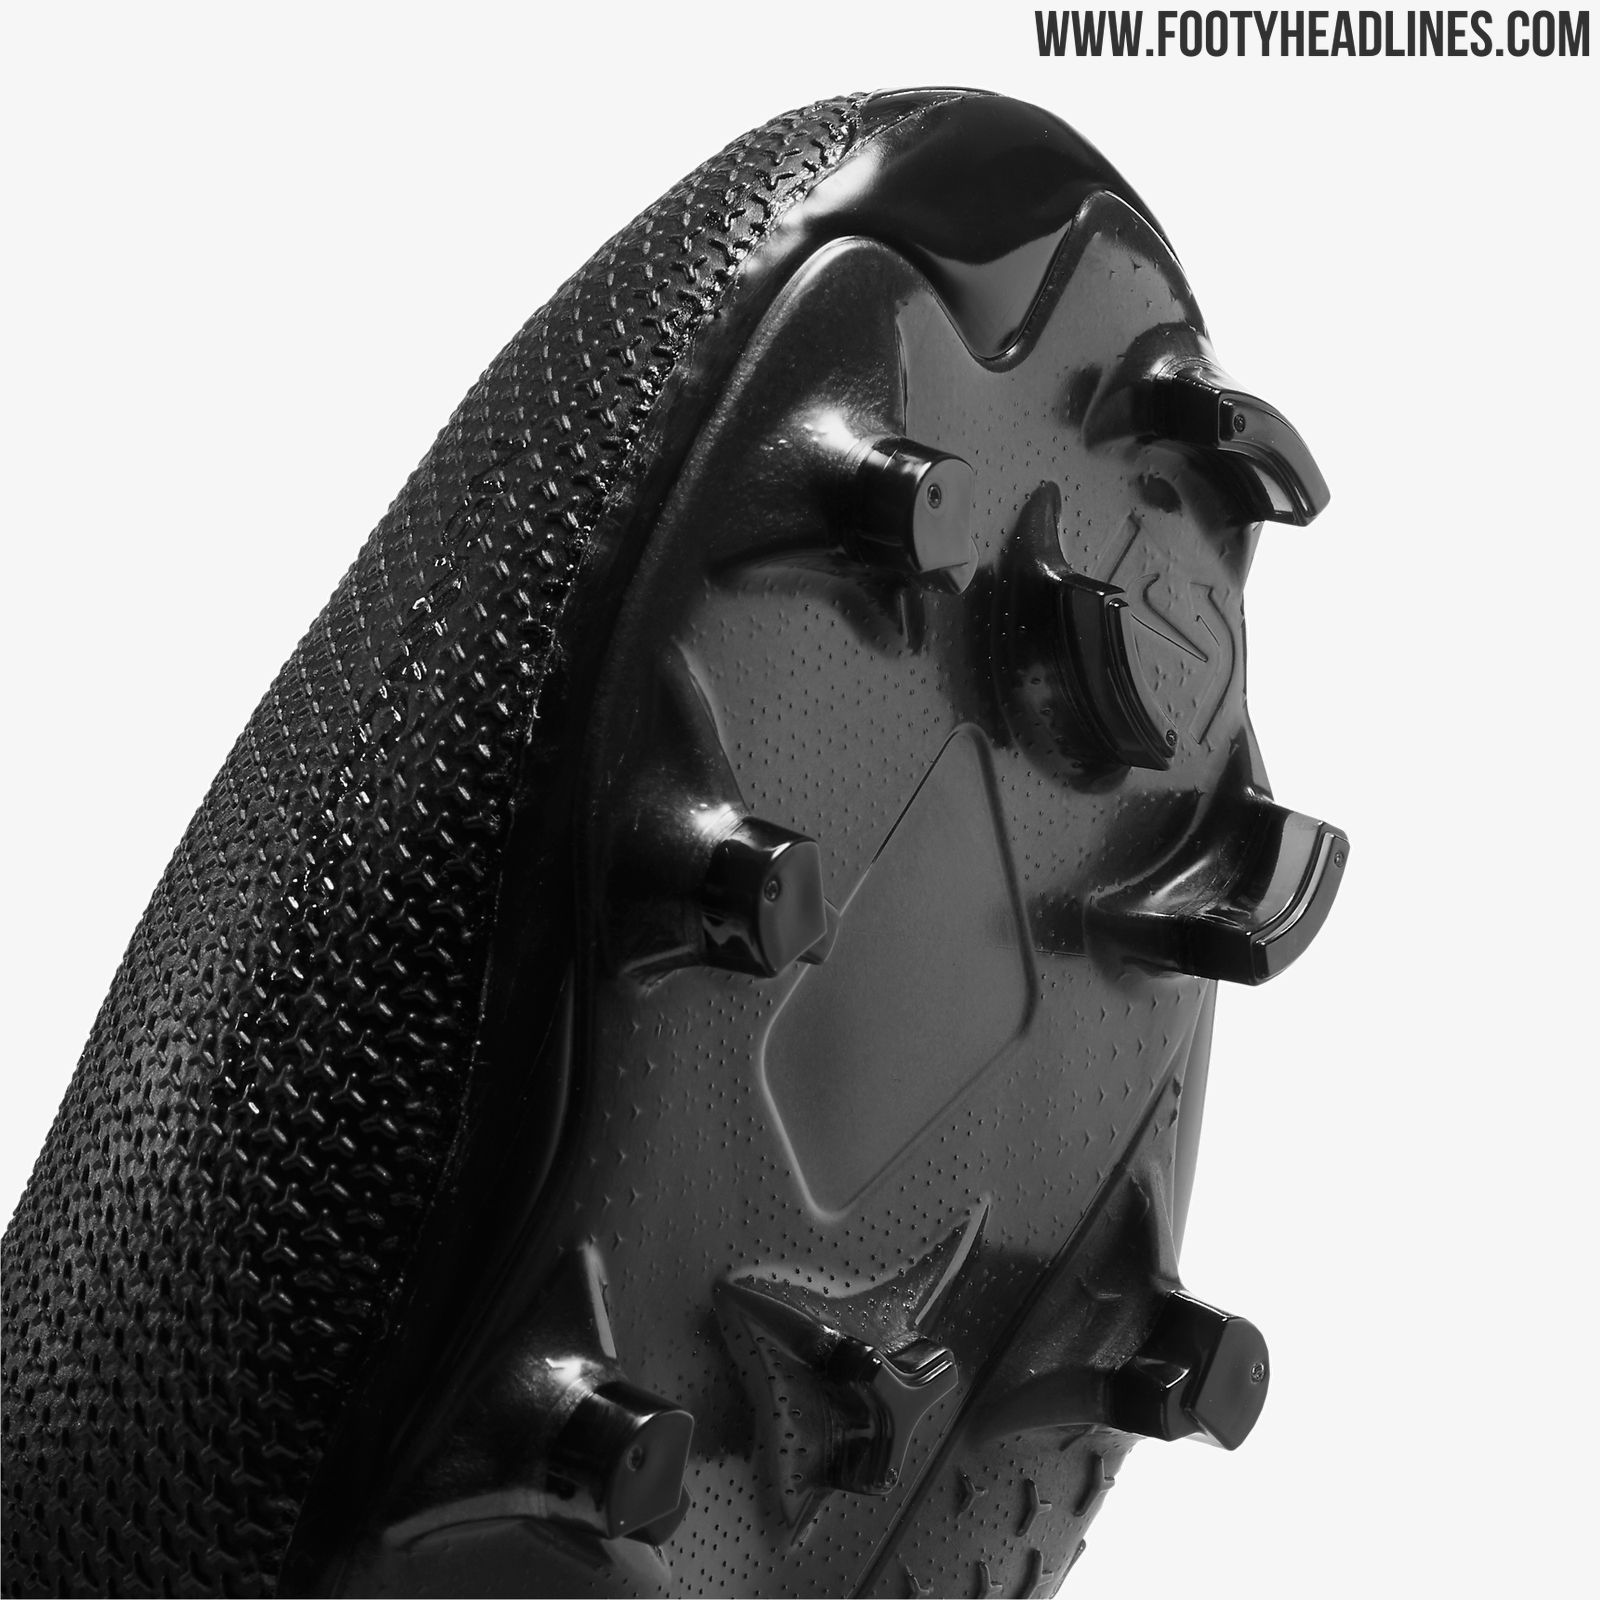 Blackout Nike Phantom Vision Elite Stealth Ops Boots Released - Footy ...